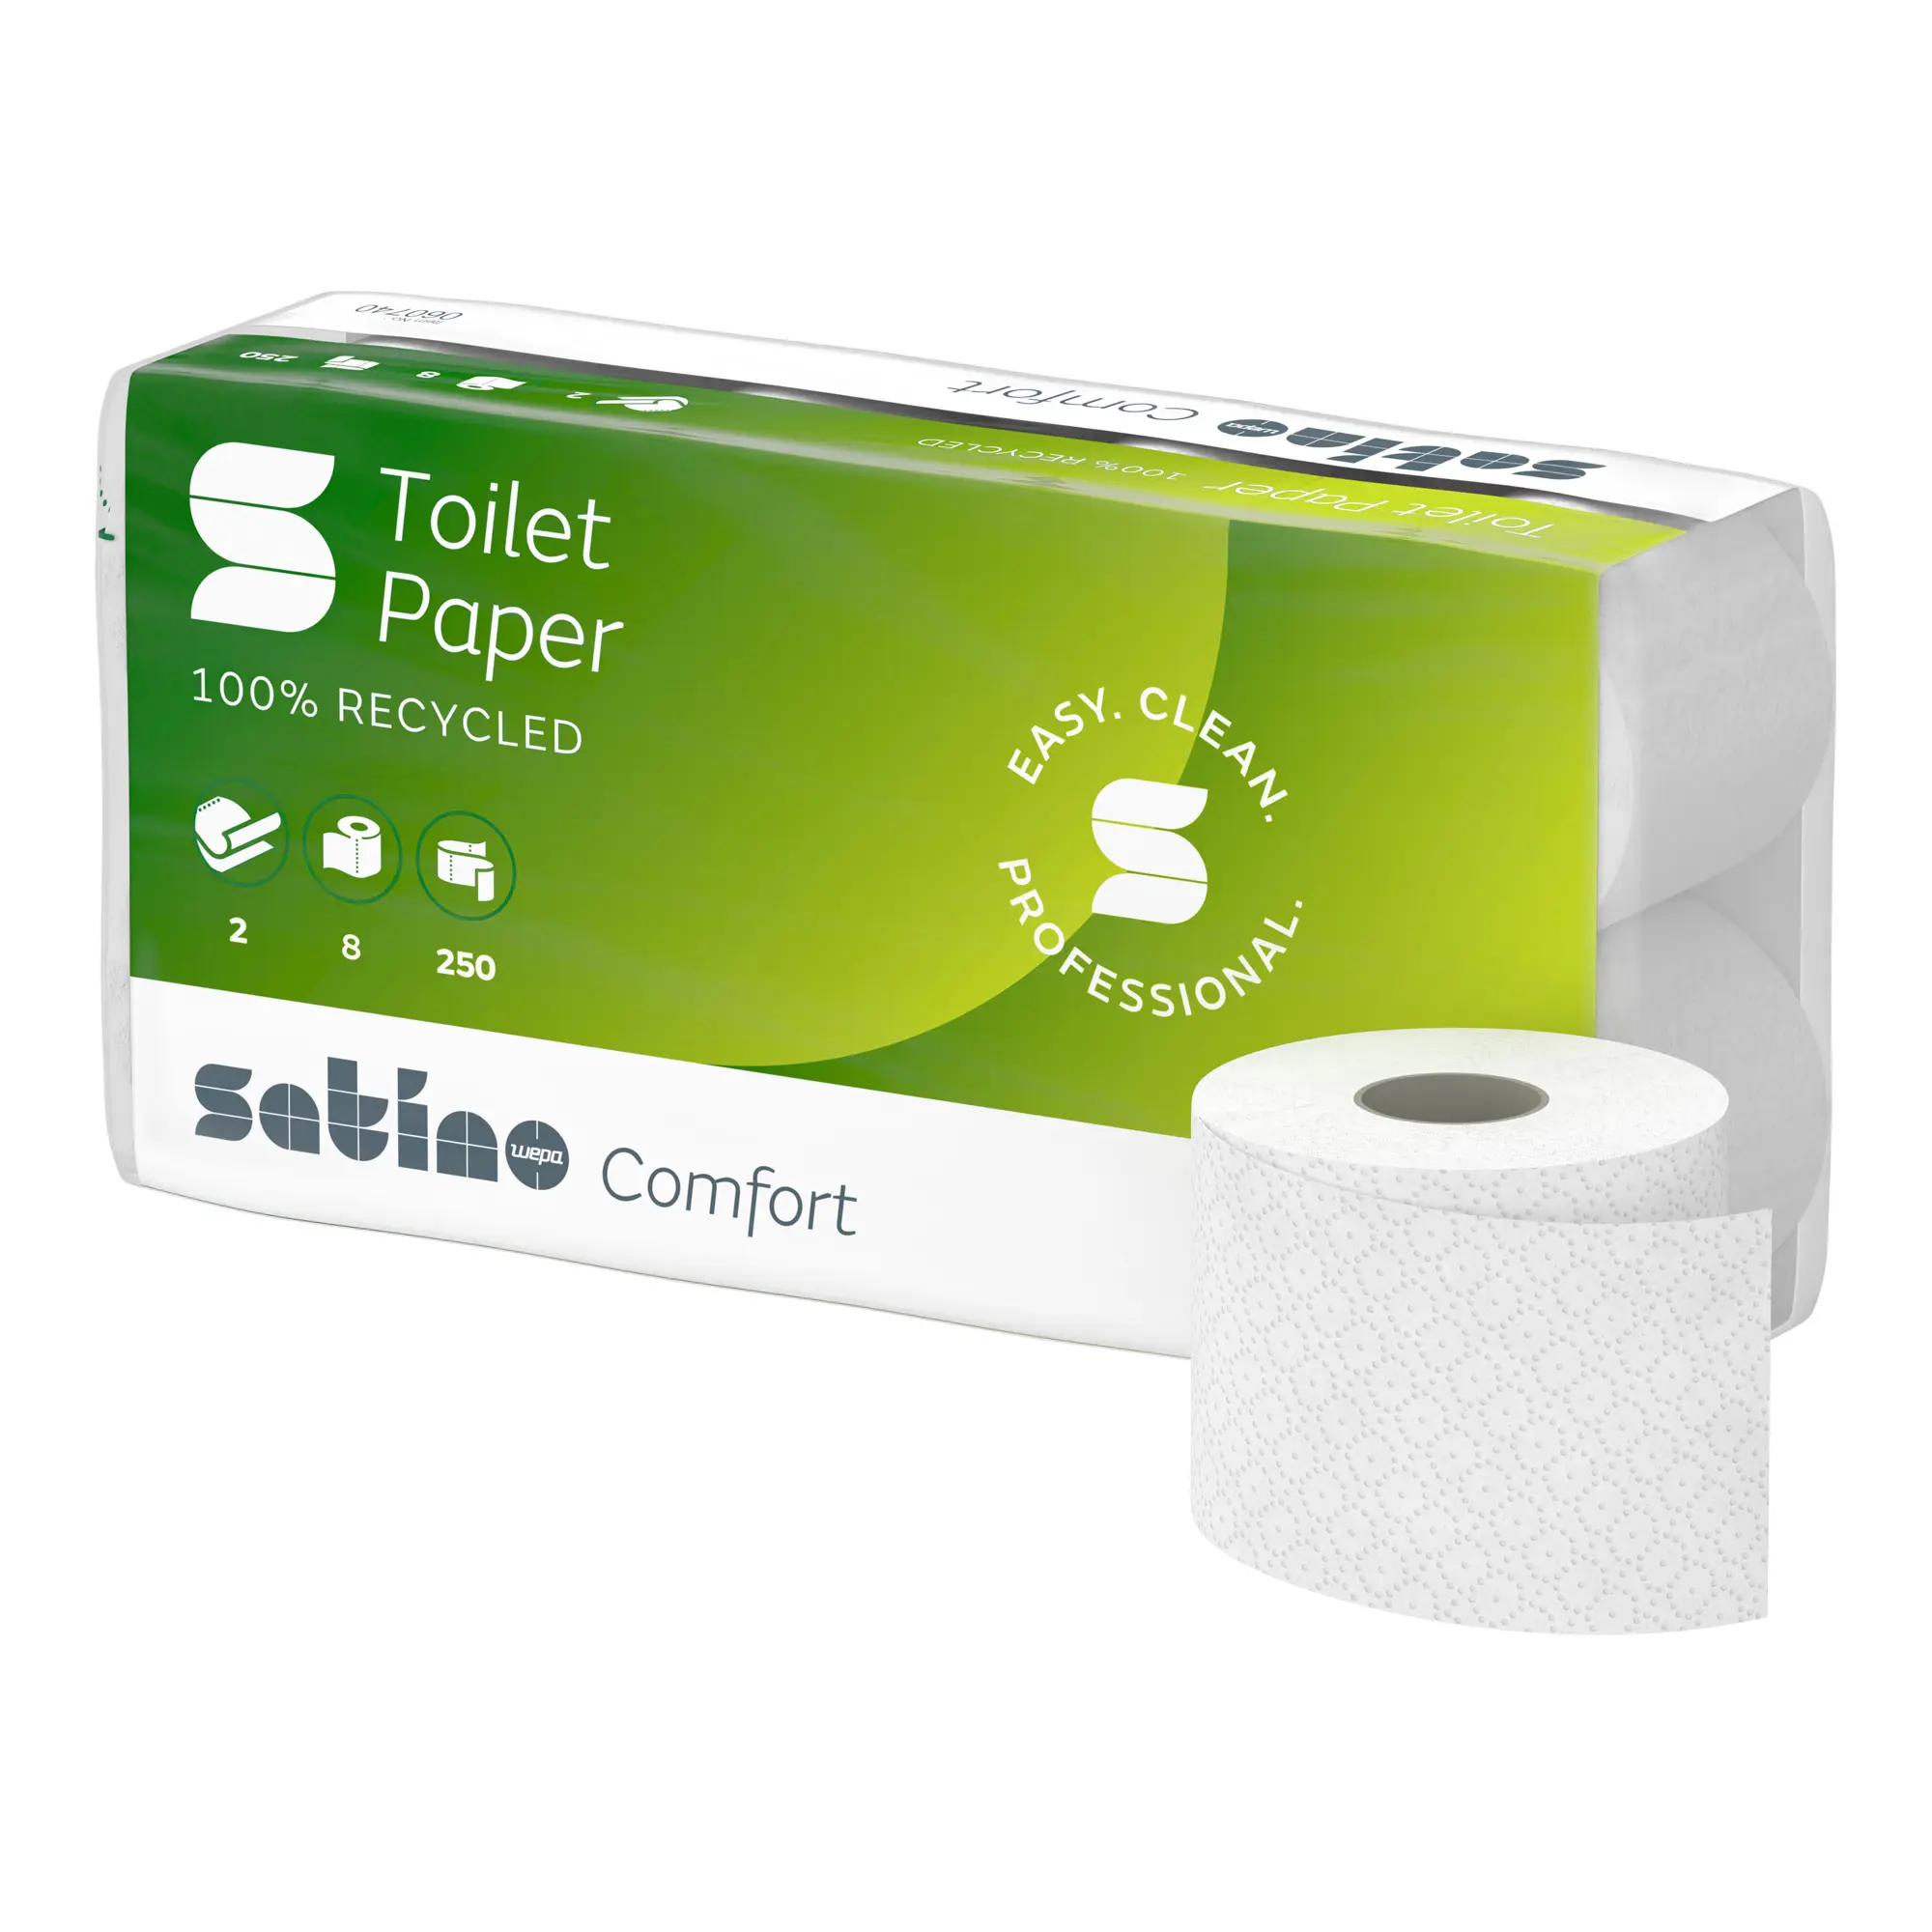 Satino by Wepa comfort Toilettenpapier Recycling, 2-lagig, 250 Blatt 64 Rollen 060740_1